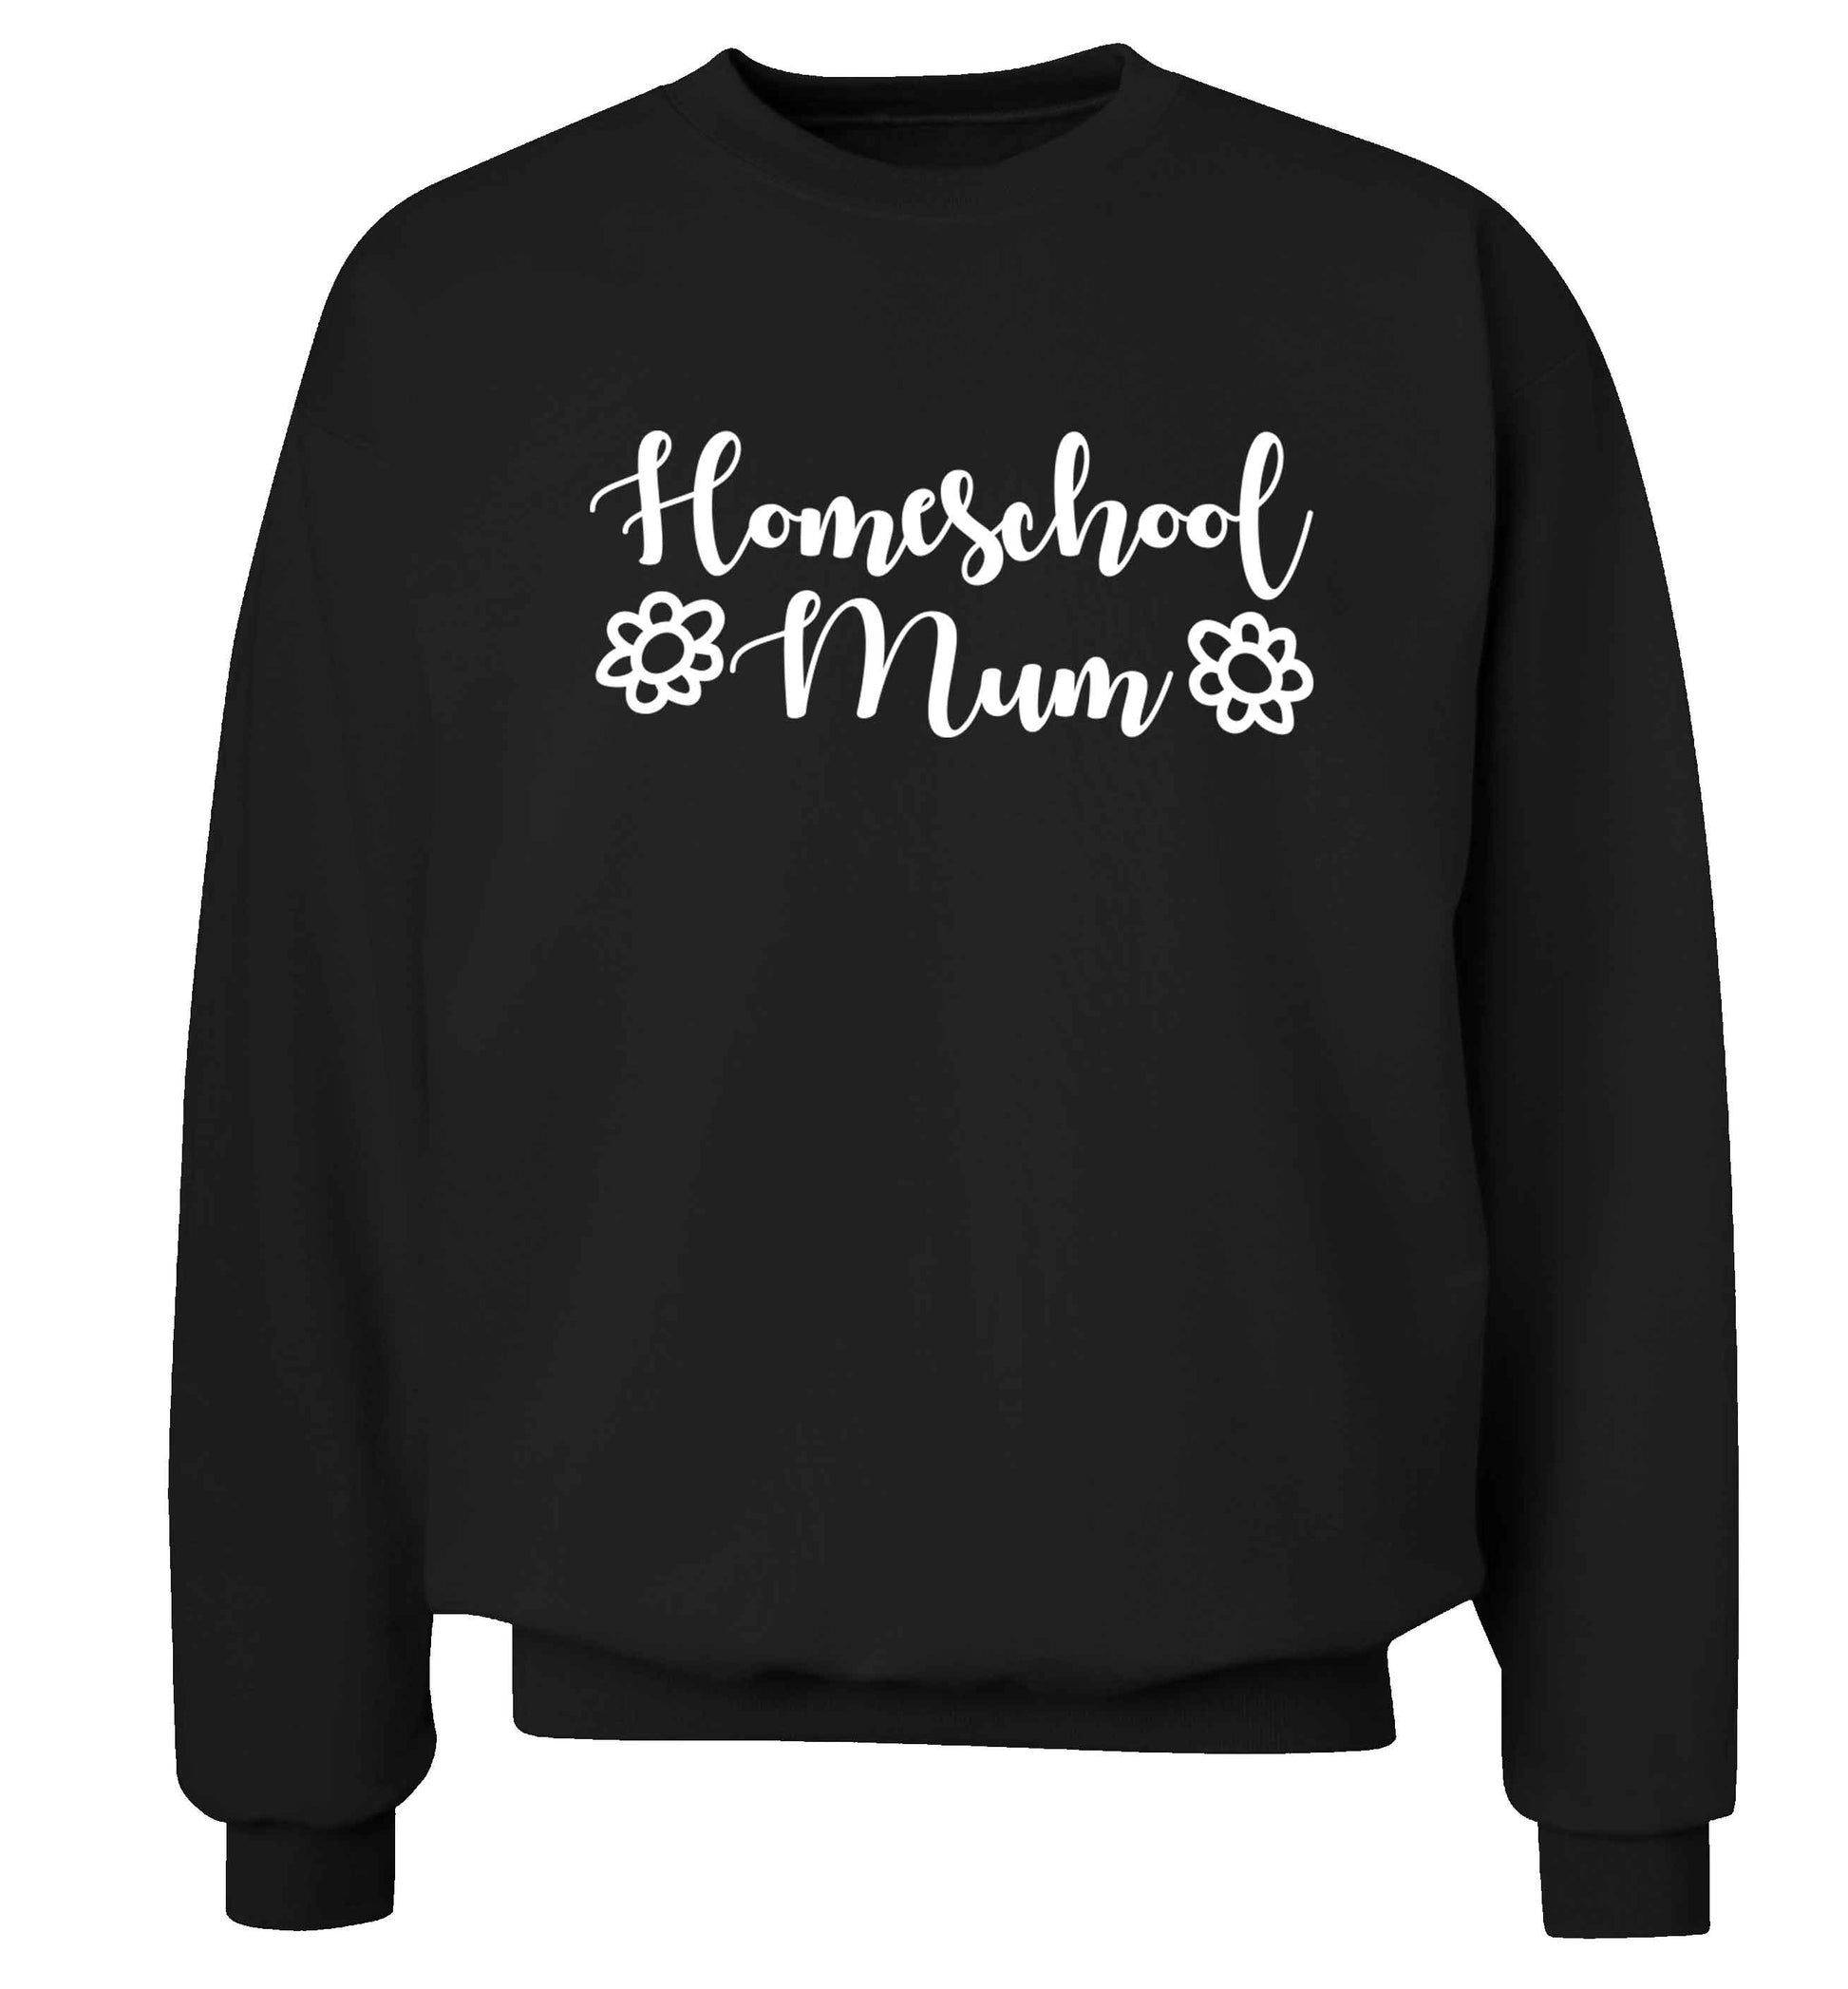 Homeschool mum Adult's unisex black Sweater 2XL